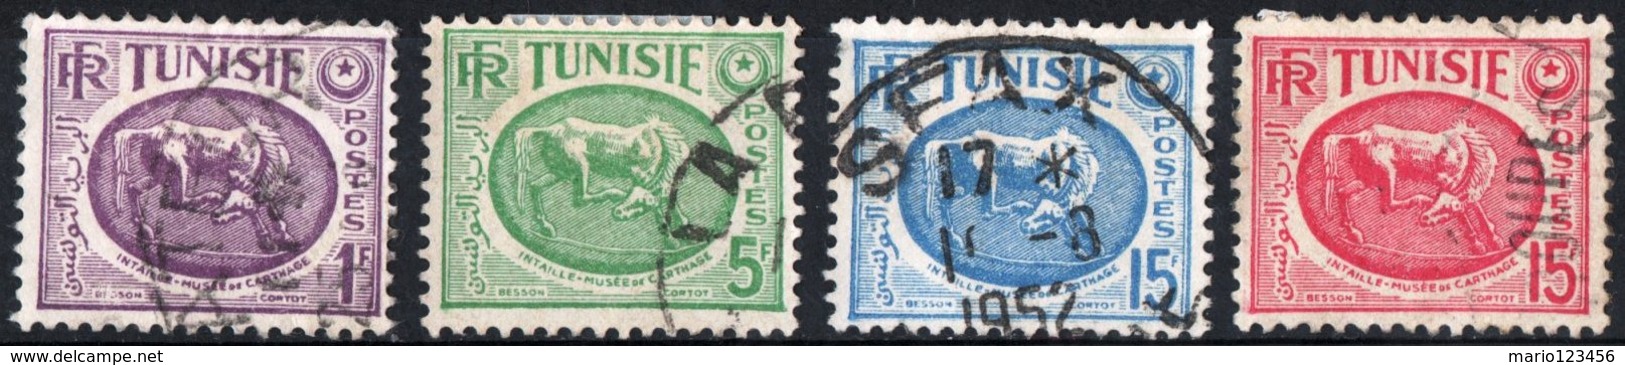 TUNISIA, MUSEI, CARTAGINE, 1950-1951, FRANCOBOLLI USATI,  YT 339,342,344,345   Scott 215,218,221,222 - Used Stamps